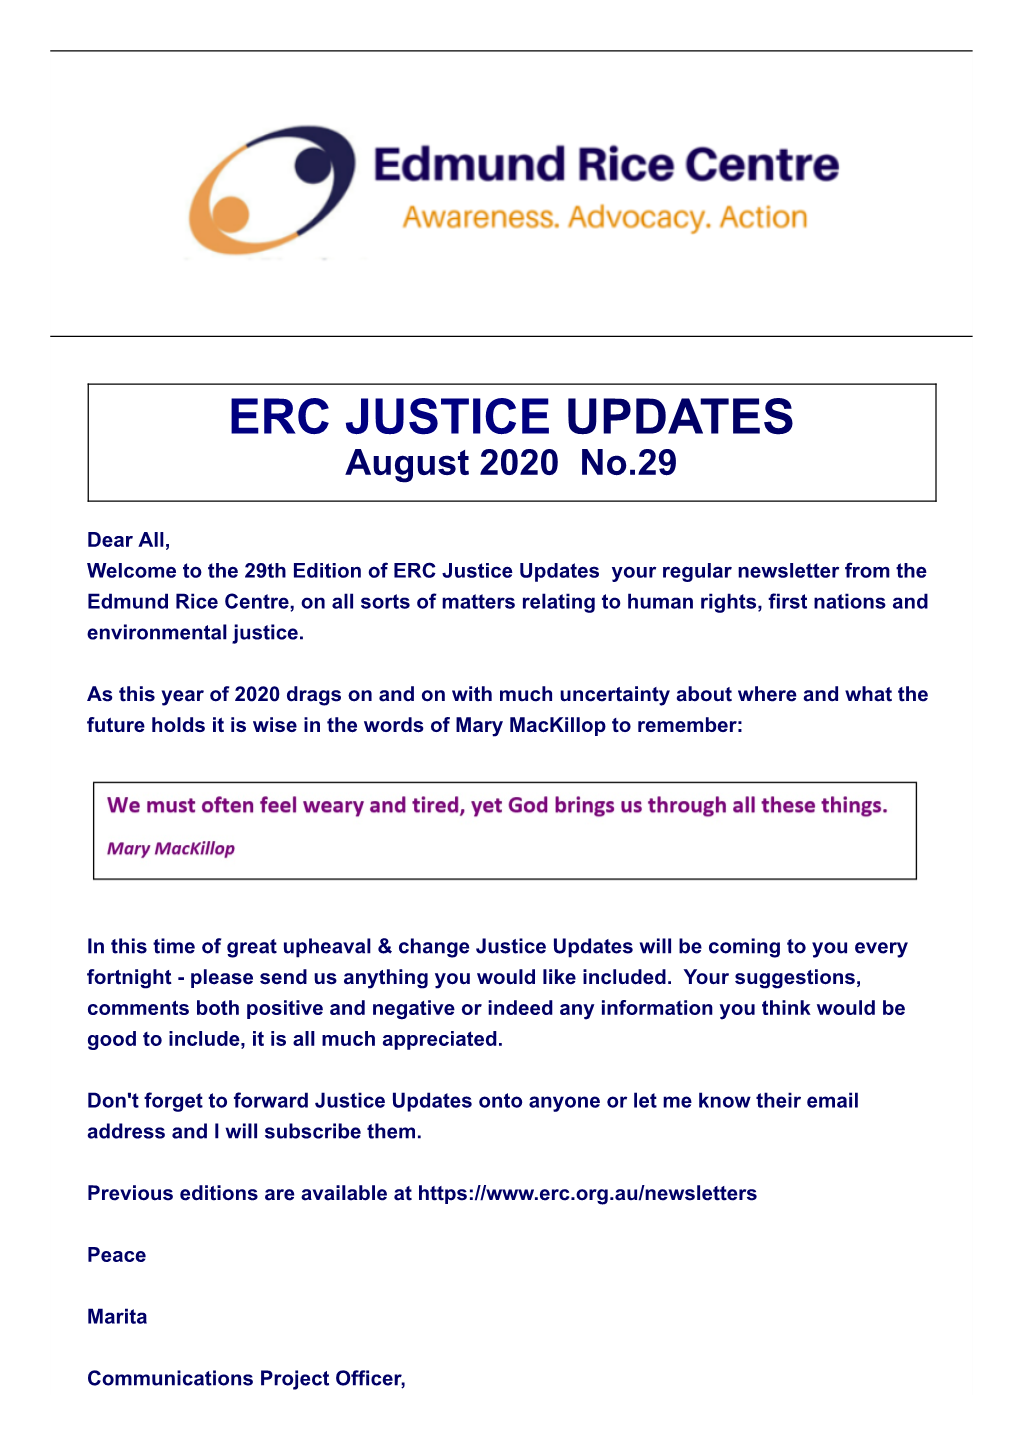 ERC JUSTICE UPDATES AUGUST 2020 Issue 2